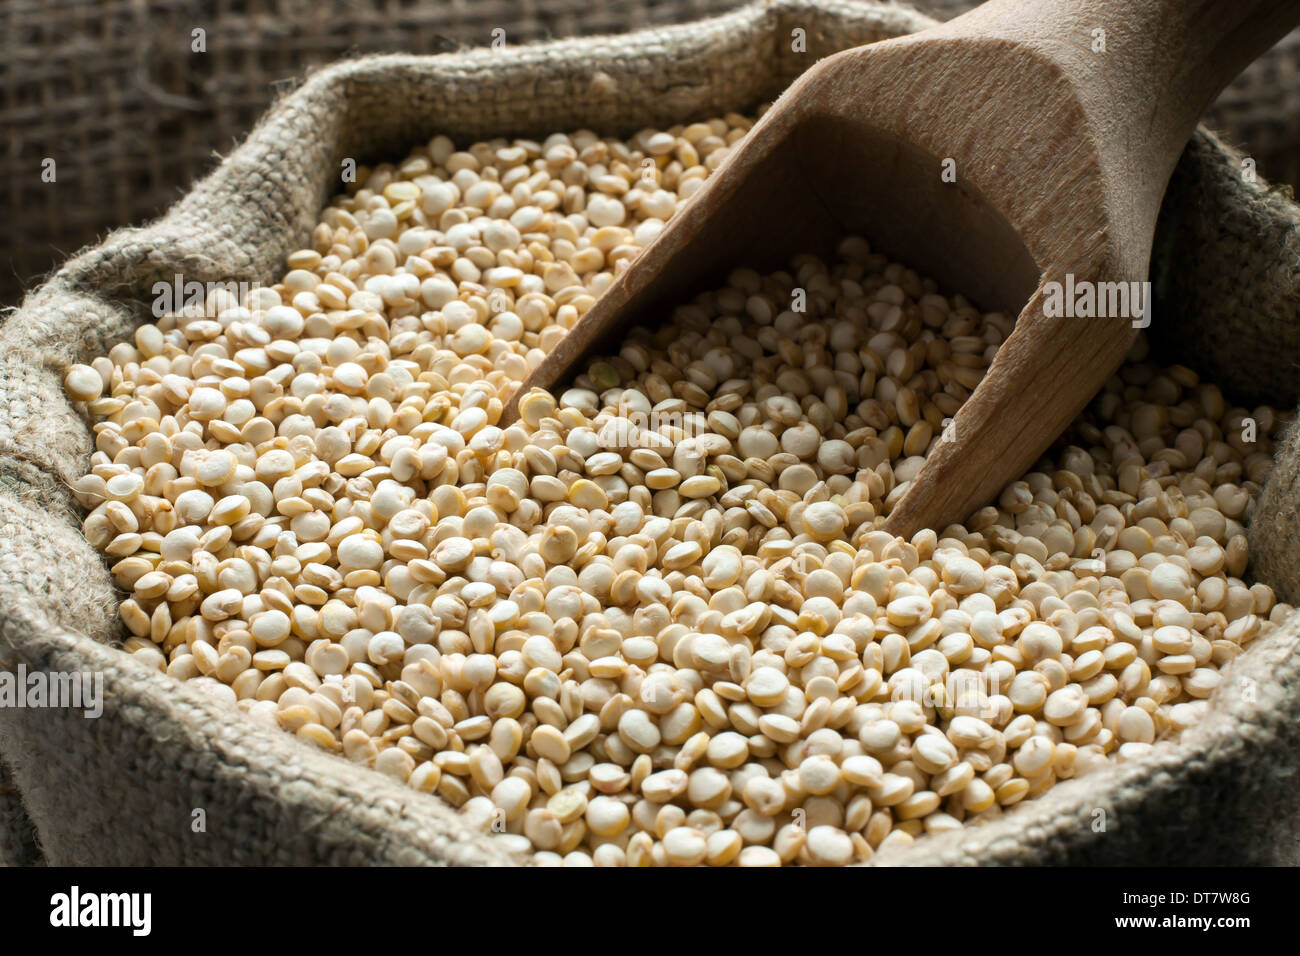 Gesunden Quinoa - Gluten frei Samen in kleinen sack Stockfoto